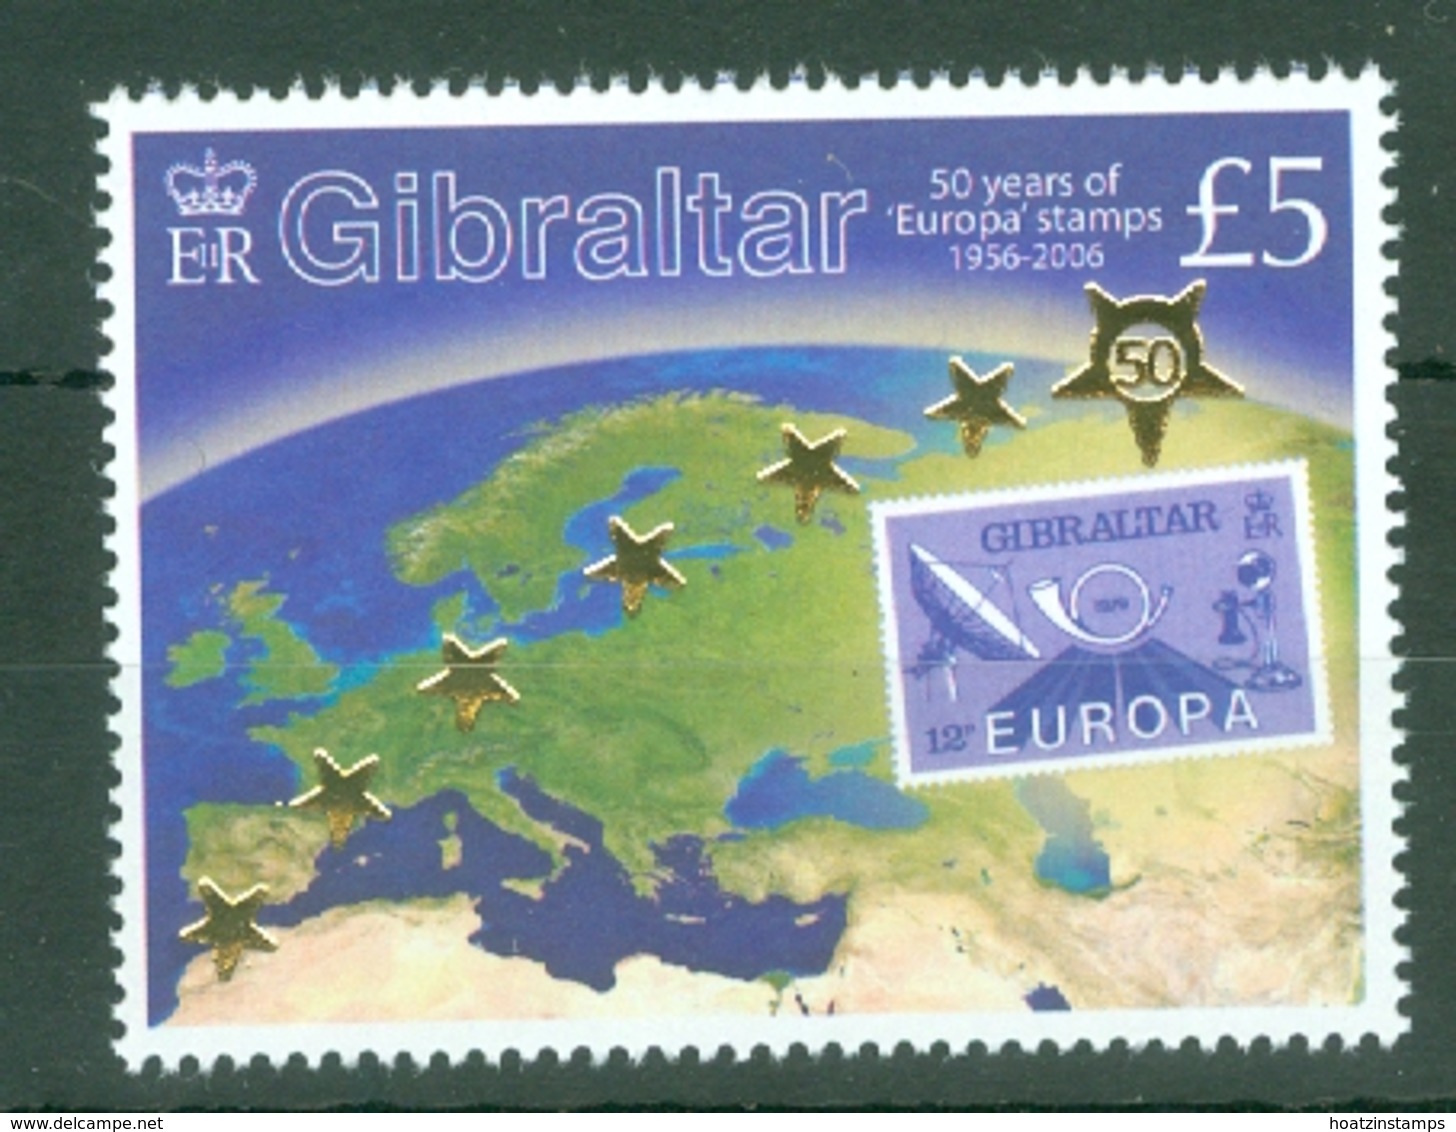 Gibraltar: 2005   50th Anniv Of Europa Stamps   MNH - Gibraltar